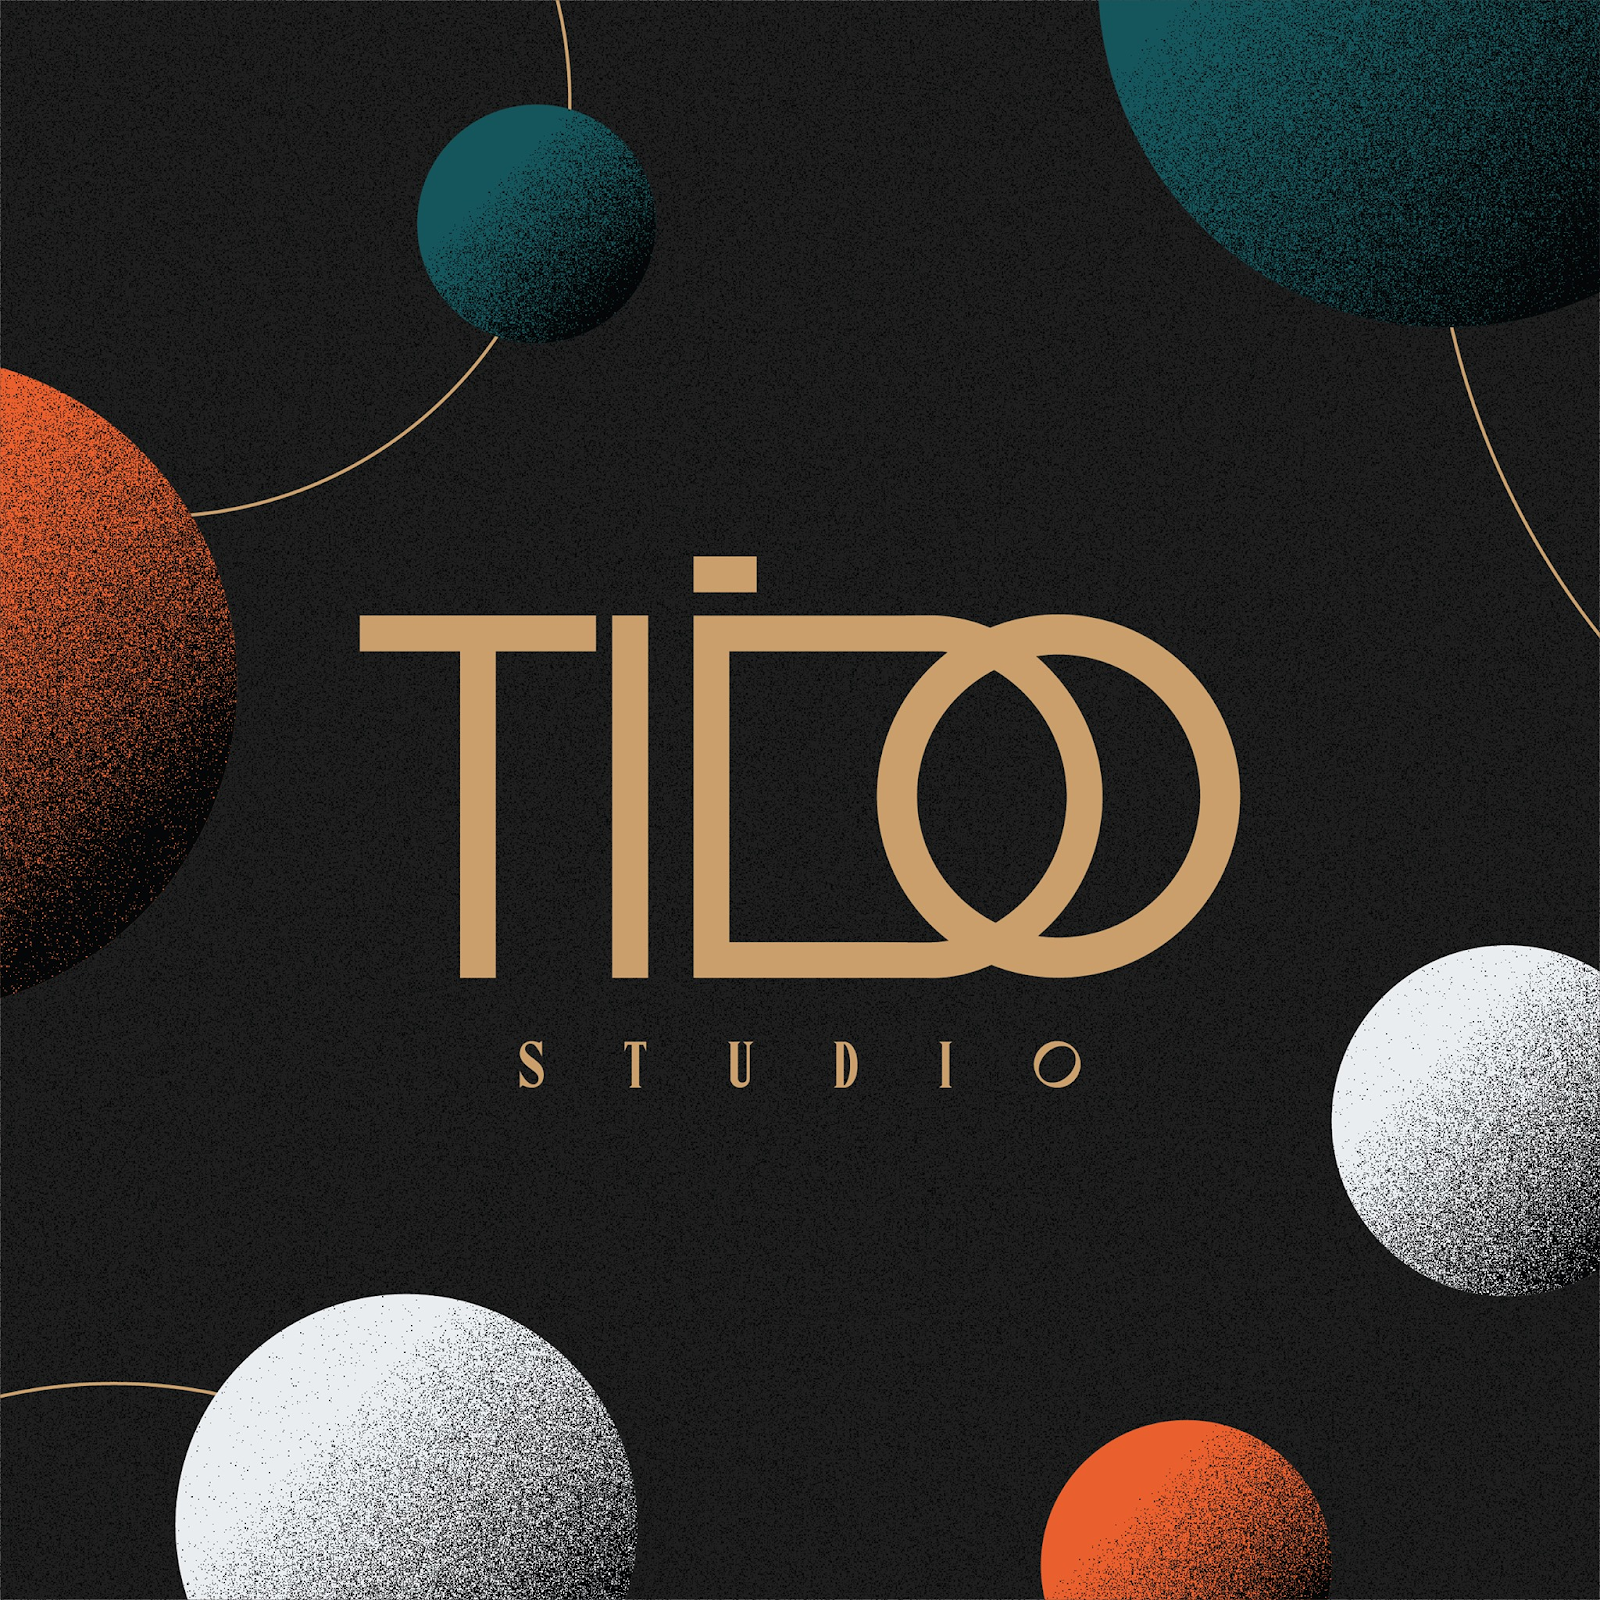 Tổng quan về TIDO Studio